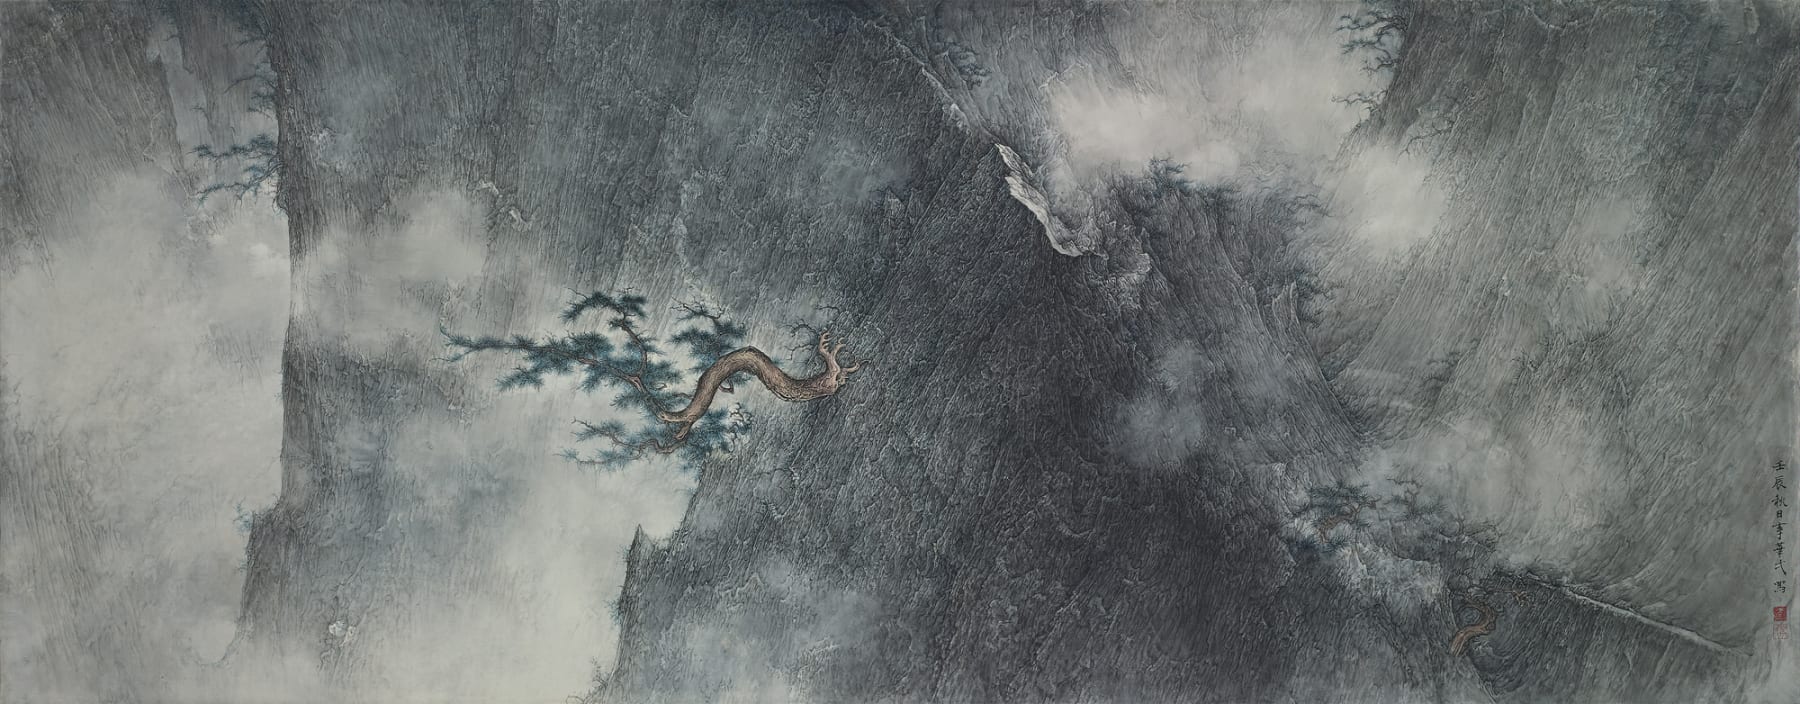 Li Huayi 李華弌, Whispering Pine, Reaching to the Clouds《孤松探雲》, 2012